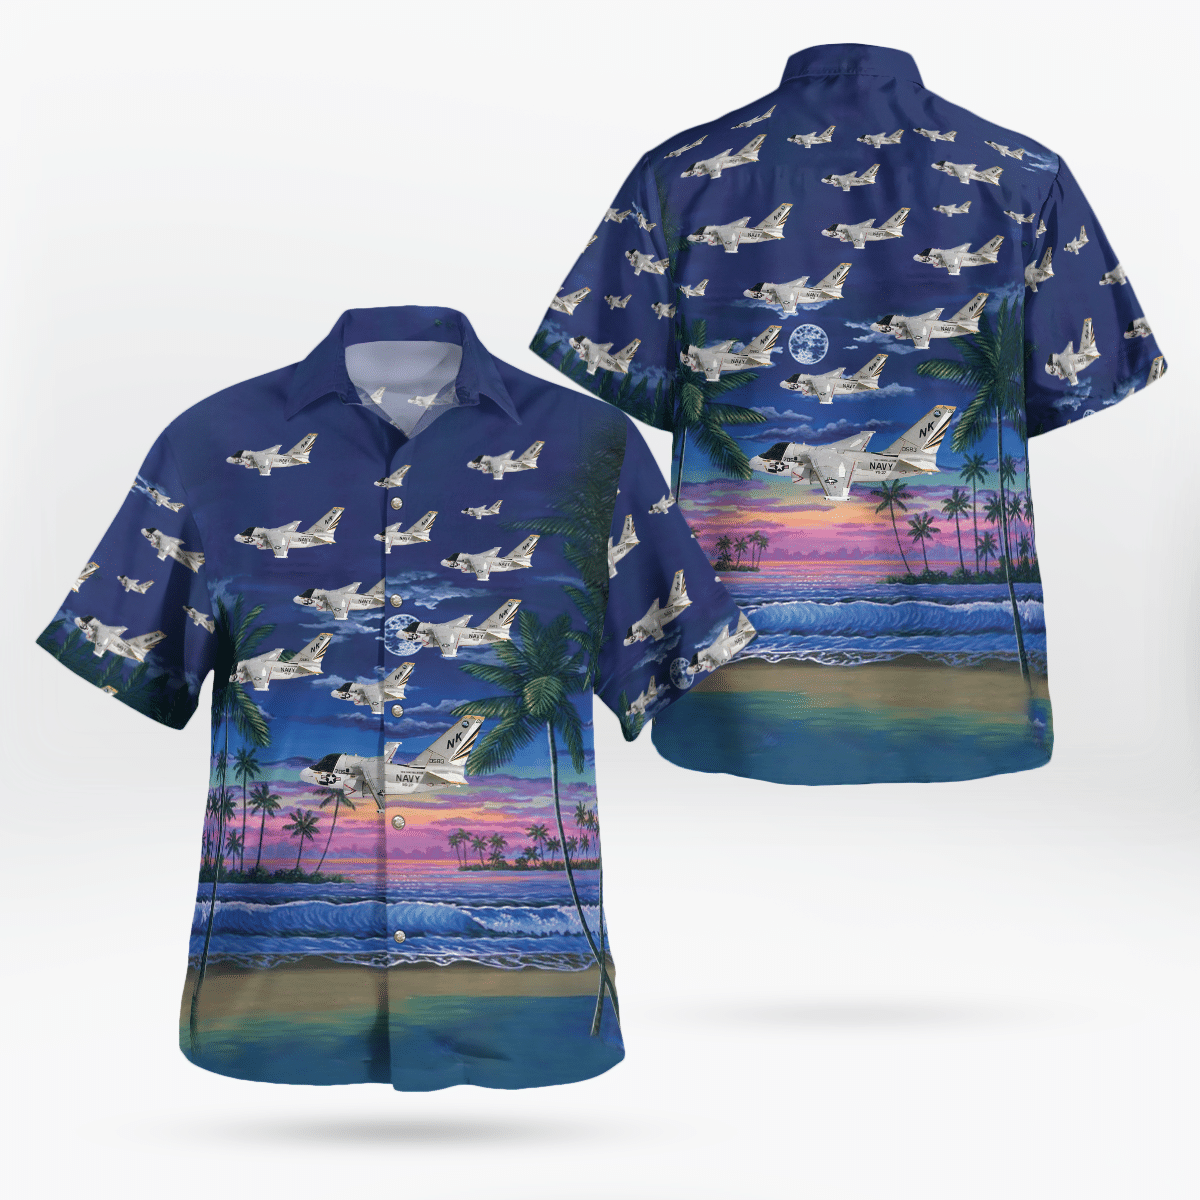 Summer so cool with top new hawaiian shirt below 47